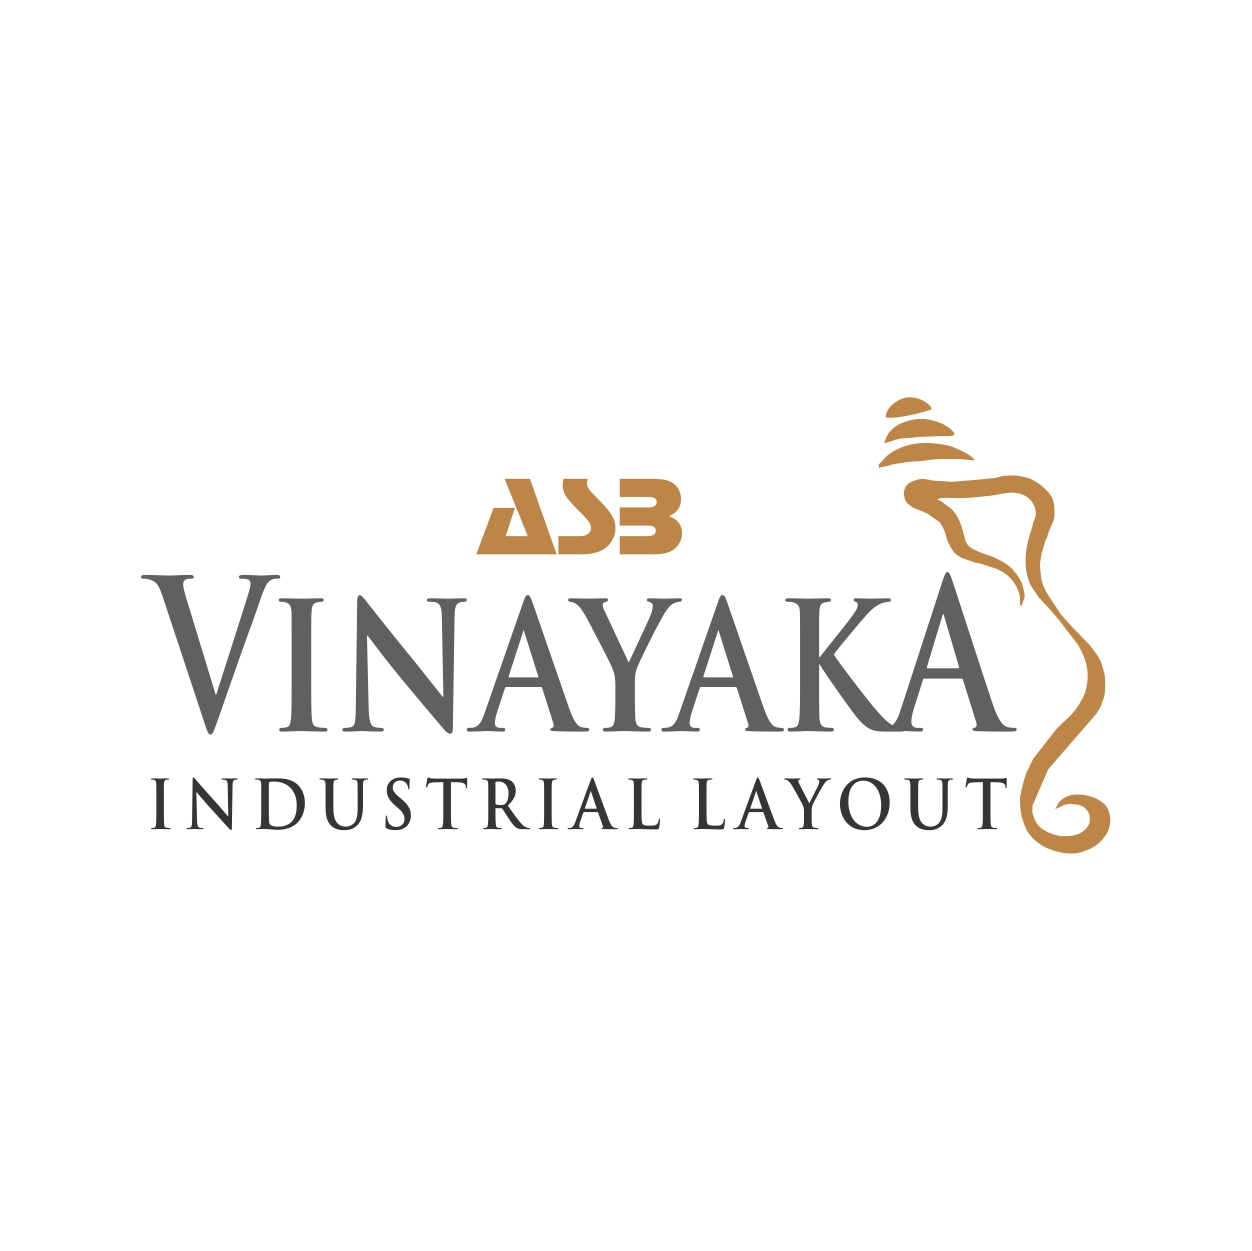 Vinayaka Industrial Layout